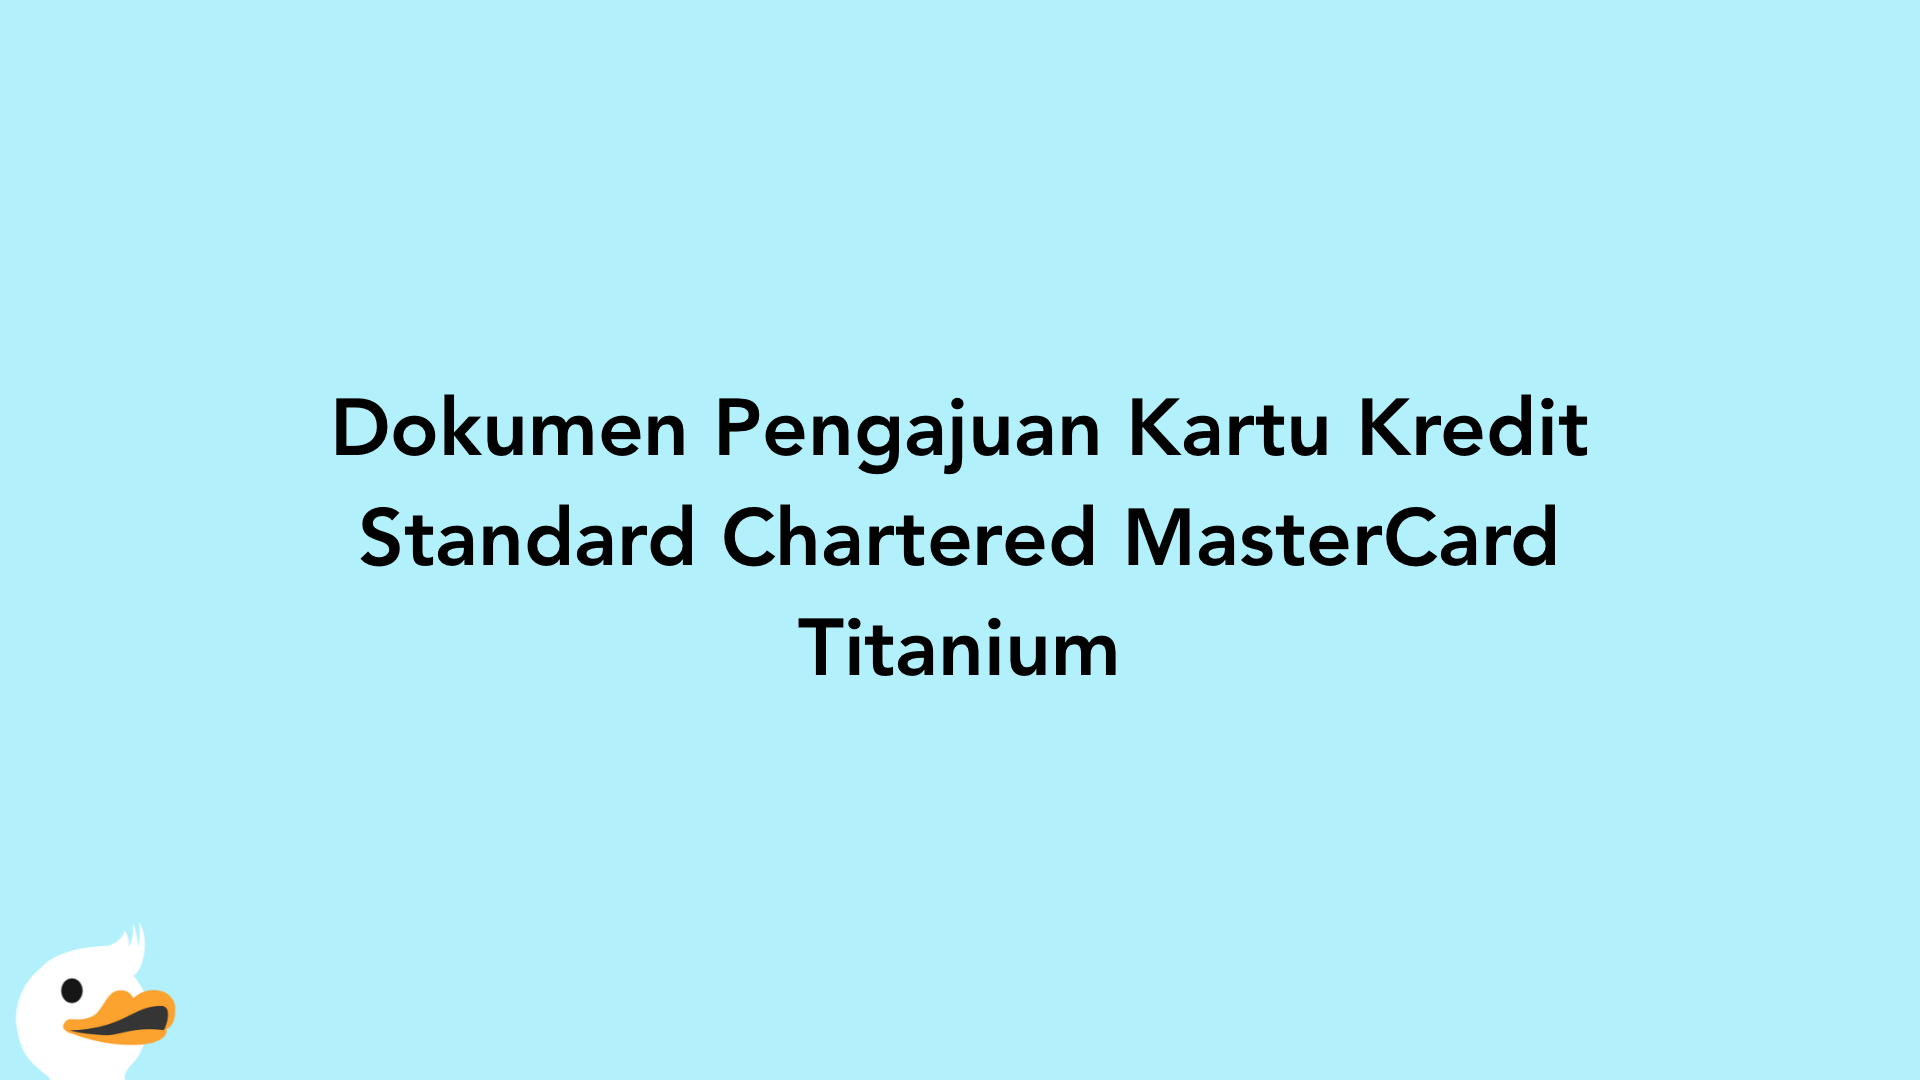 Dokumen Pengajuan Kartu Kredit Standard Chartered MasterCard Titanium